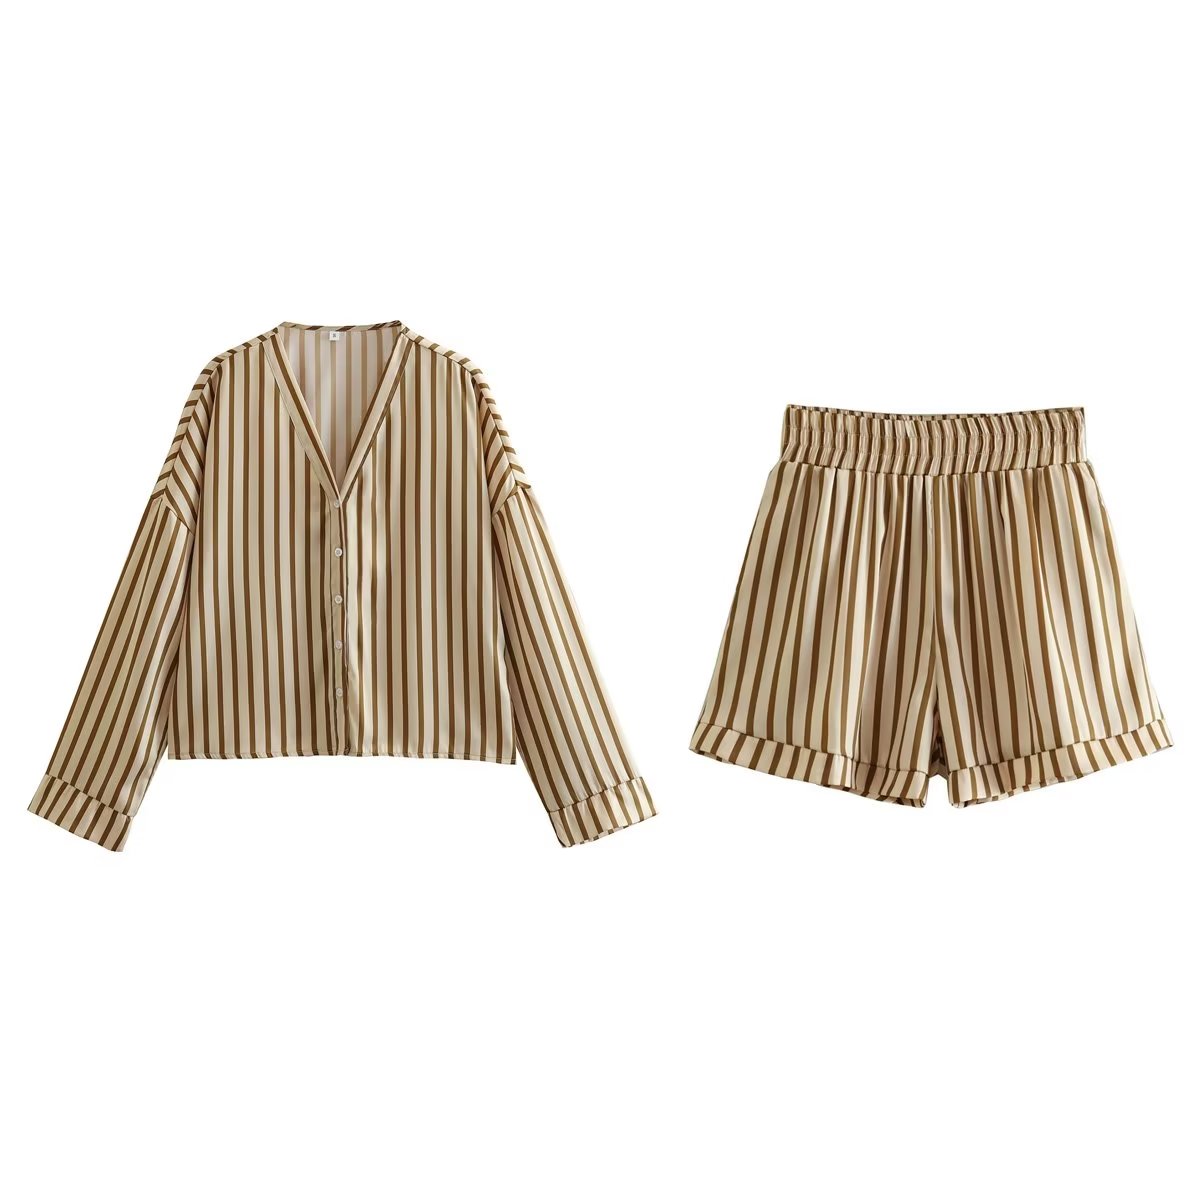 Spring Women Clothing Beige Stripes Top Short Two Piece Set